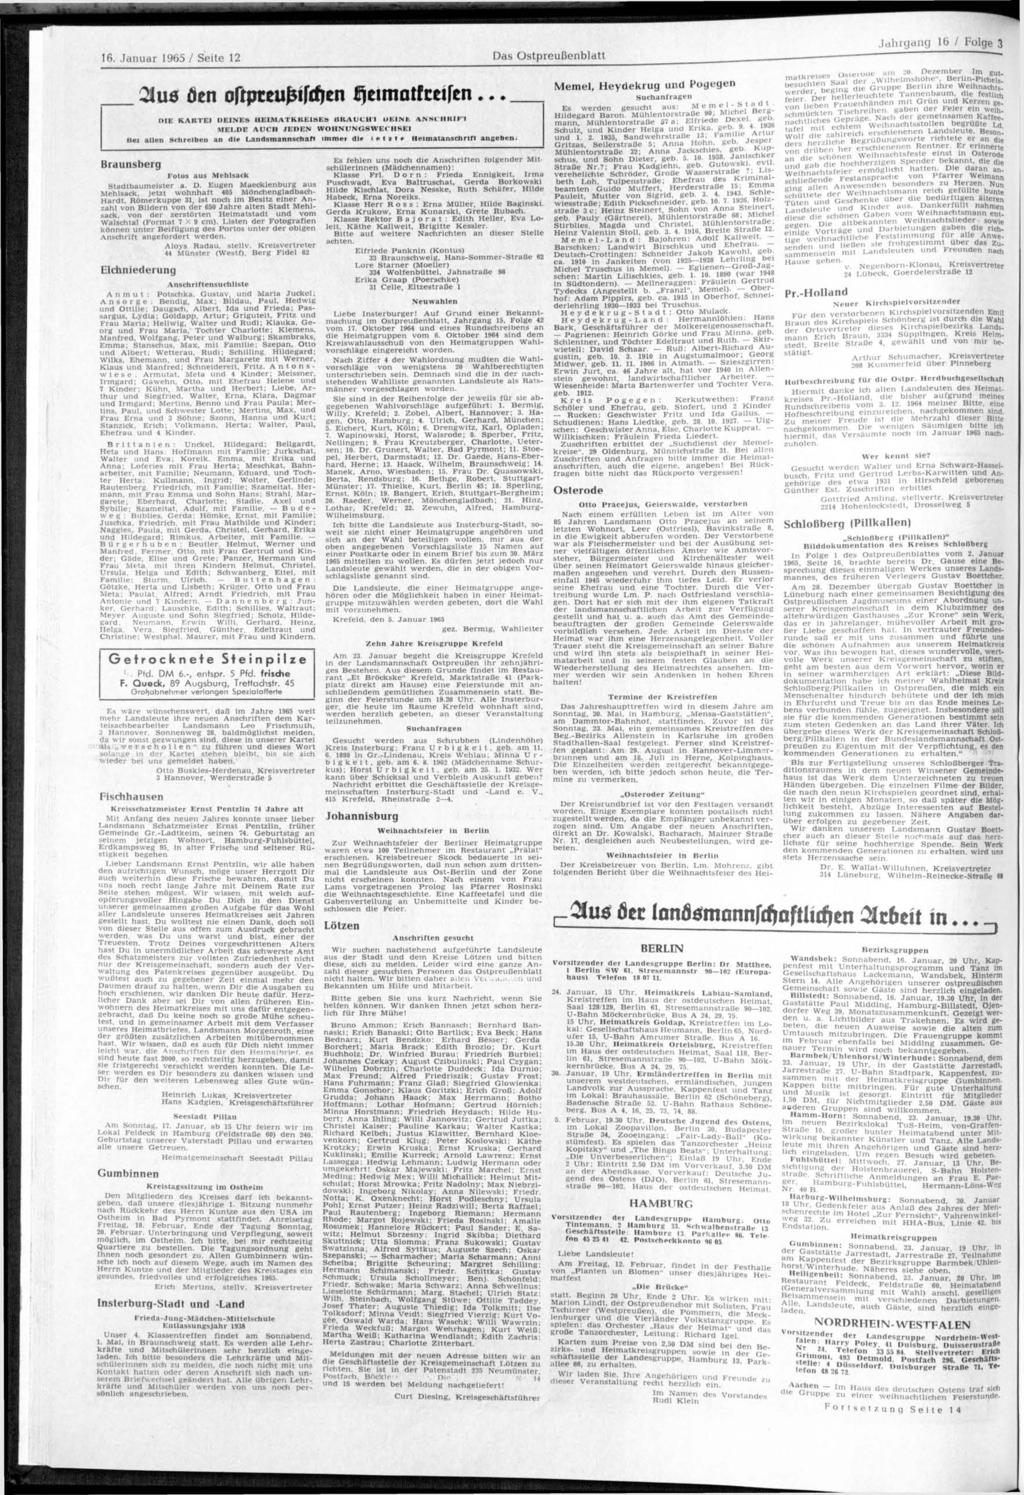 16. Januar 1965 / Seite 12 Das Ostpreußenblatt 2lus Öen ofrpteußifrhen tücimntfccifcn... DIE KARTEI DEINES HEIMATKKEISES BKA!